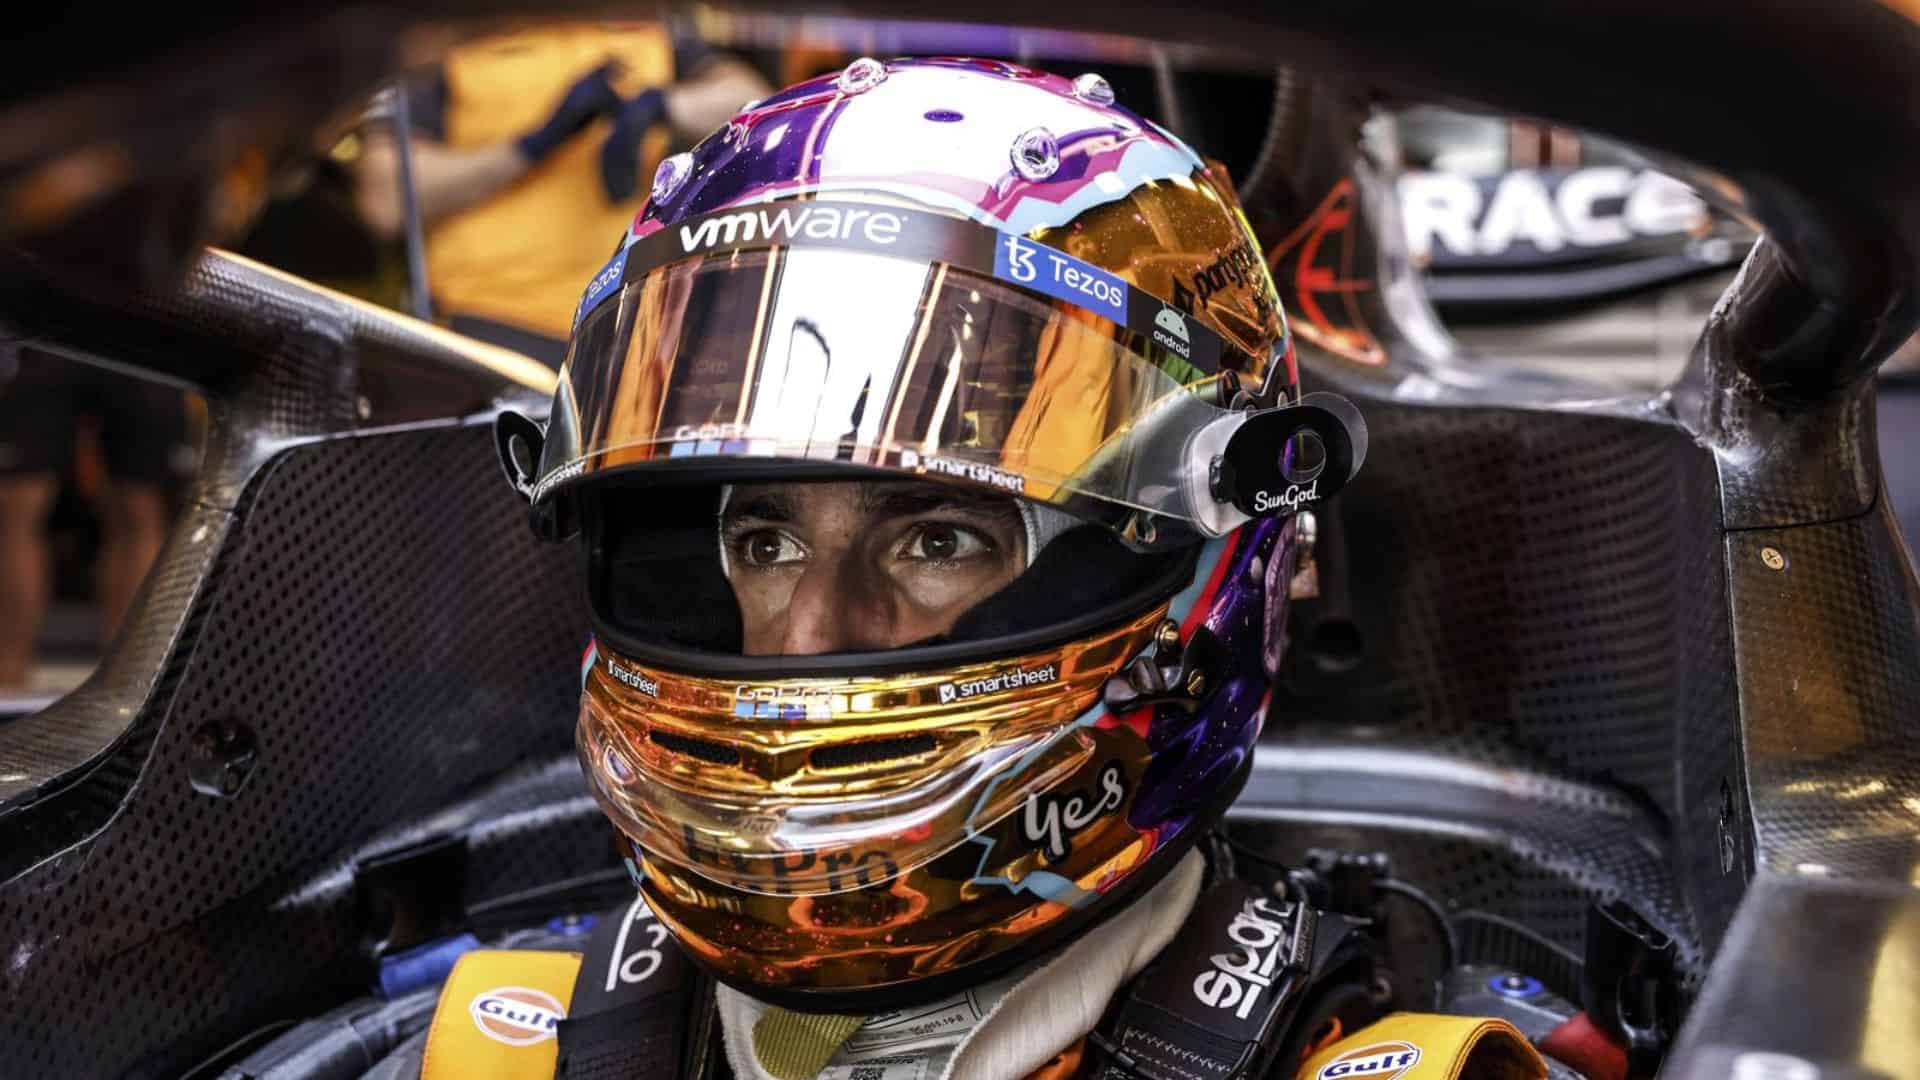 Daniel Ricciardo F1 racer